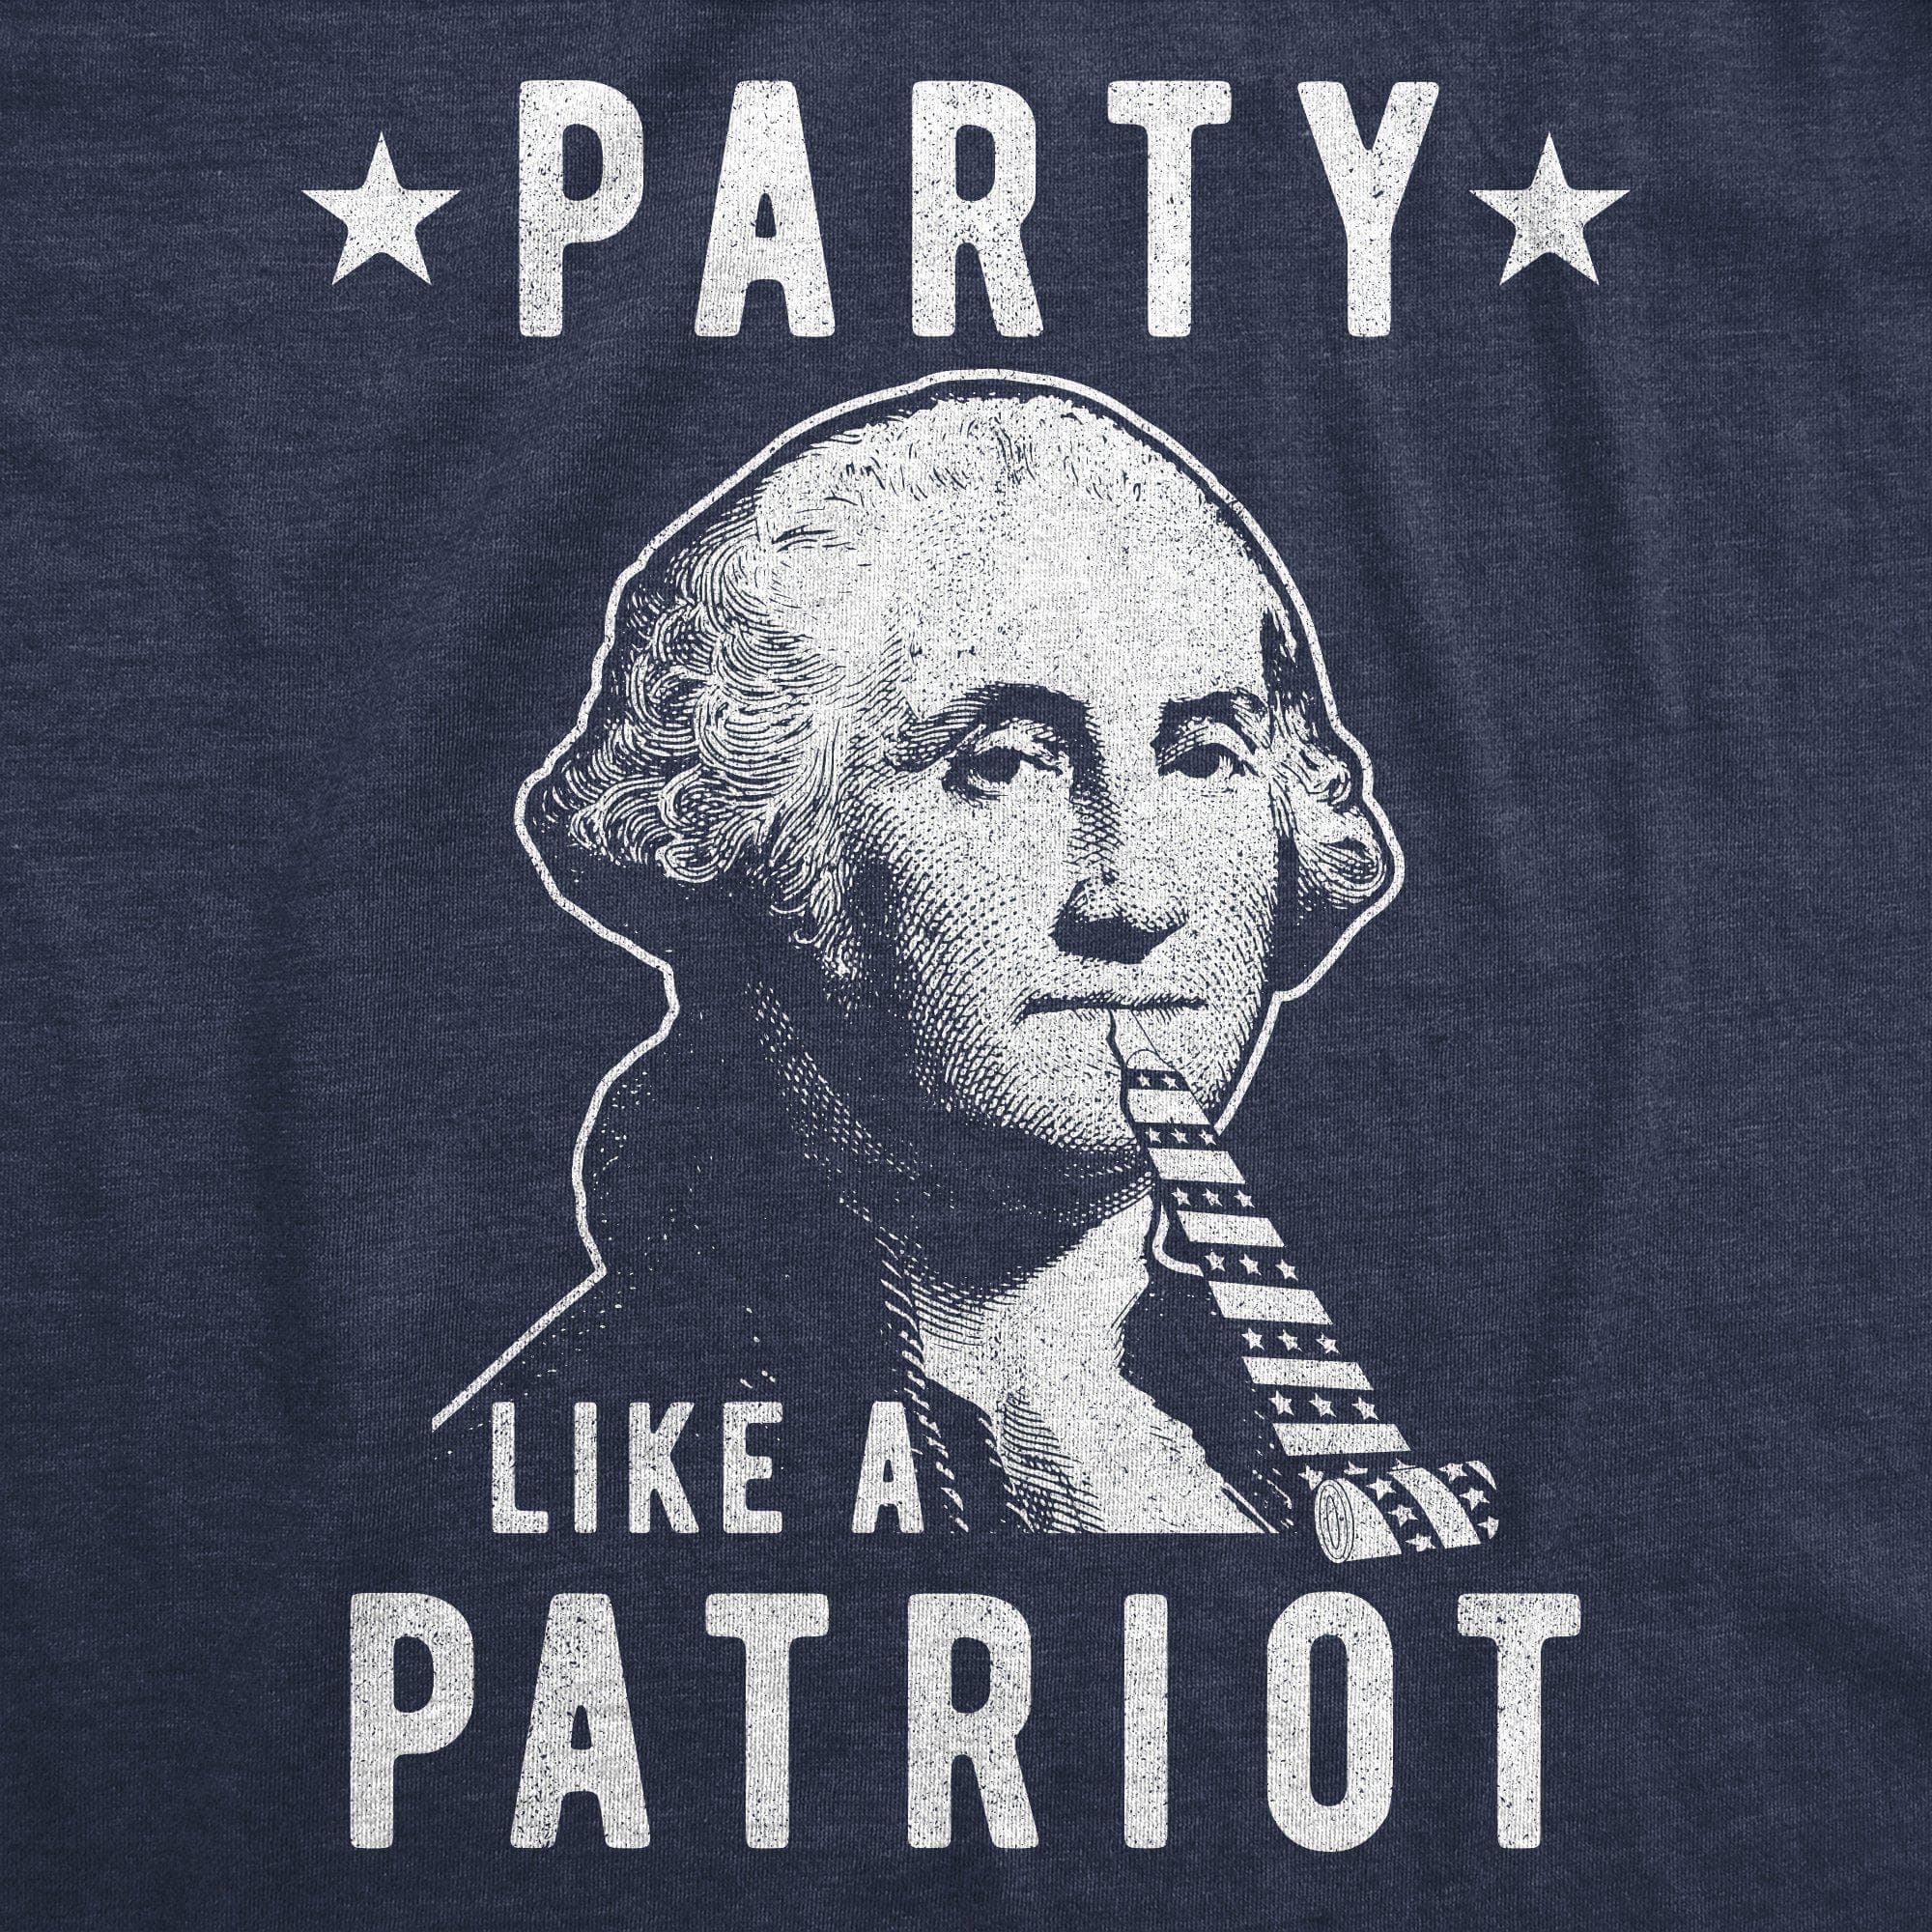 Party Like A Patriot Men's Tshirt - Crazy Dog T-Shirts